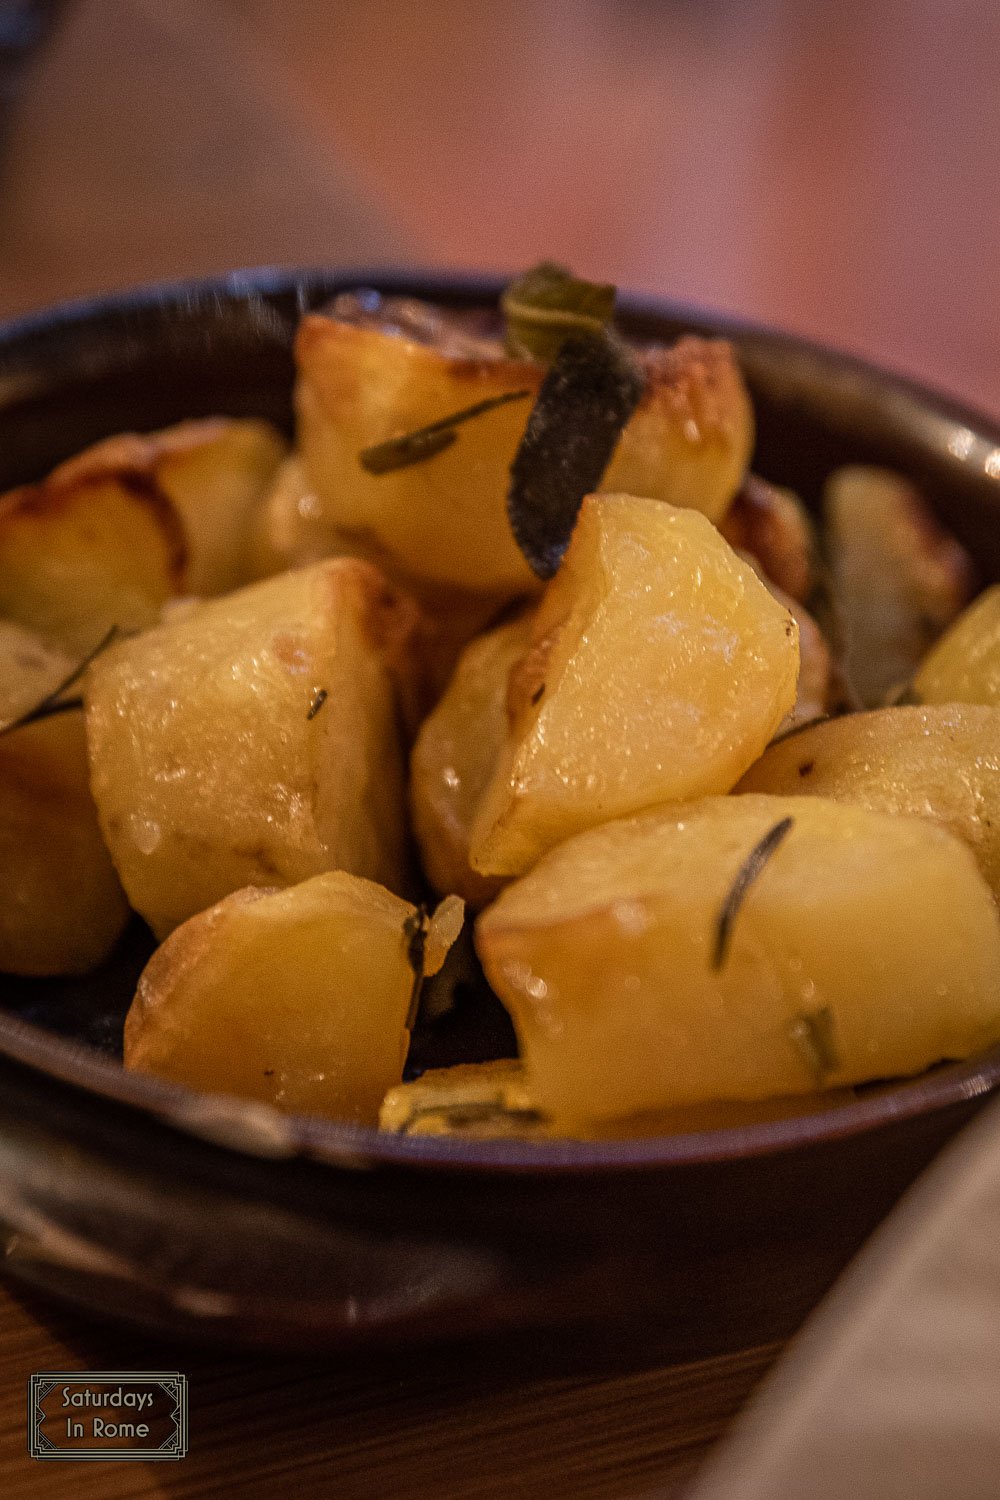 hidden gem restaurants in florence - roasted potatoes